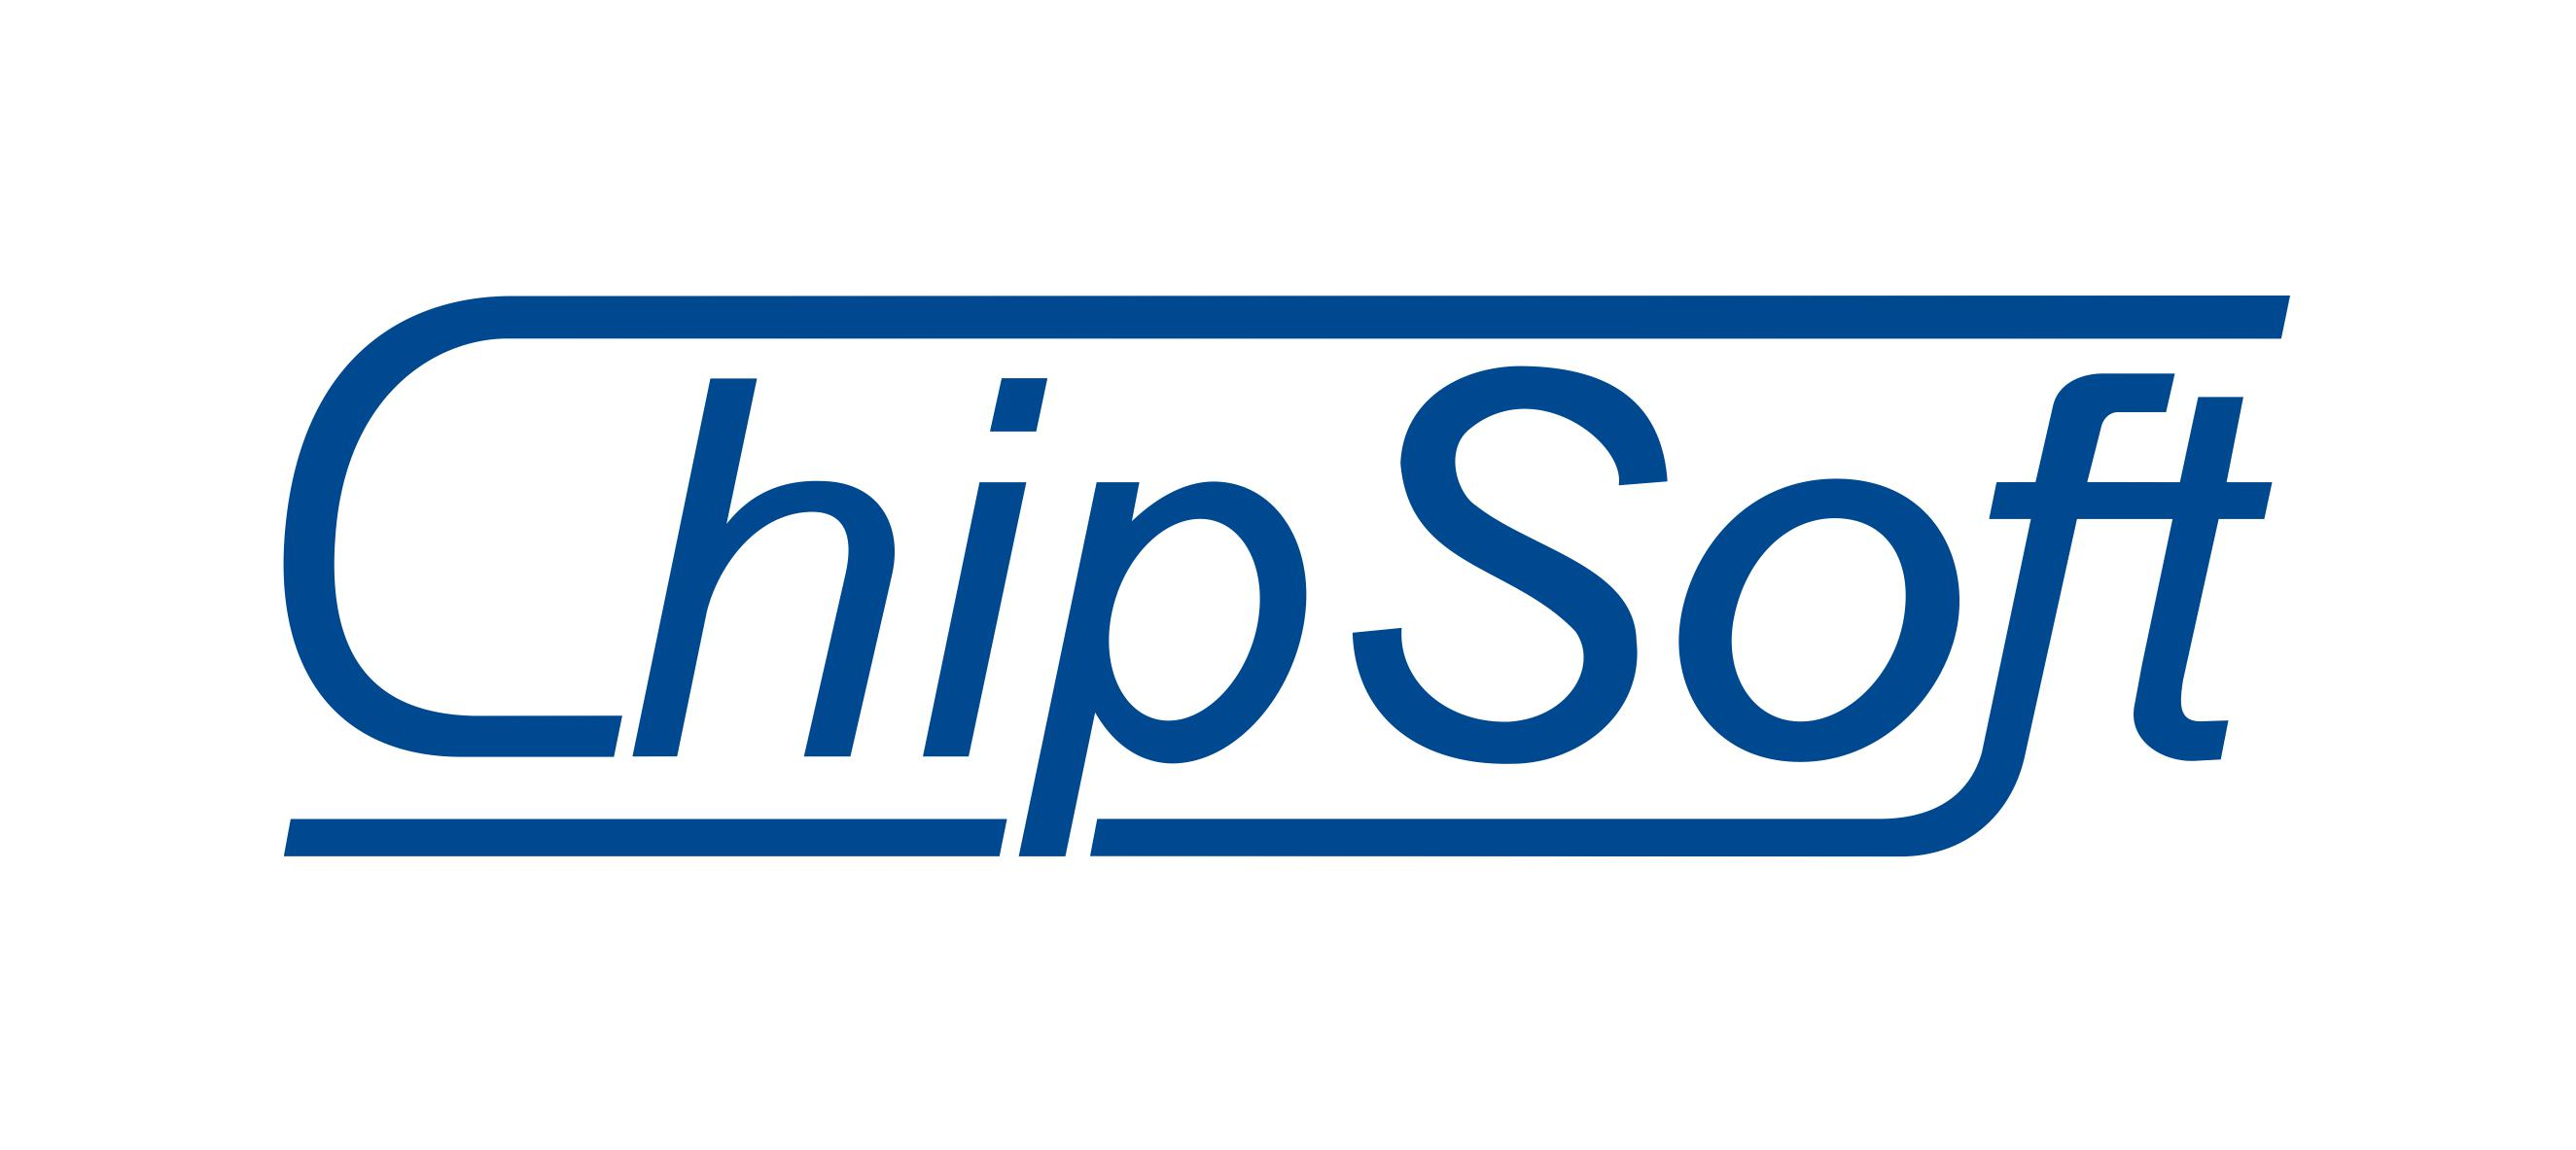 ChipSoft logo